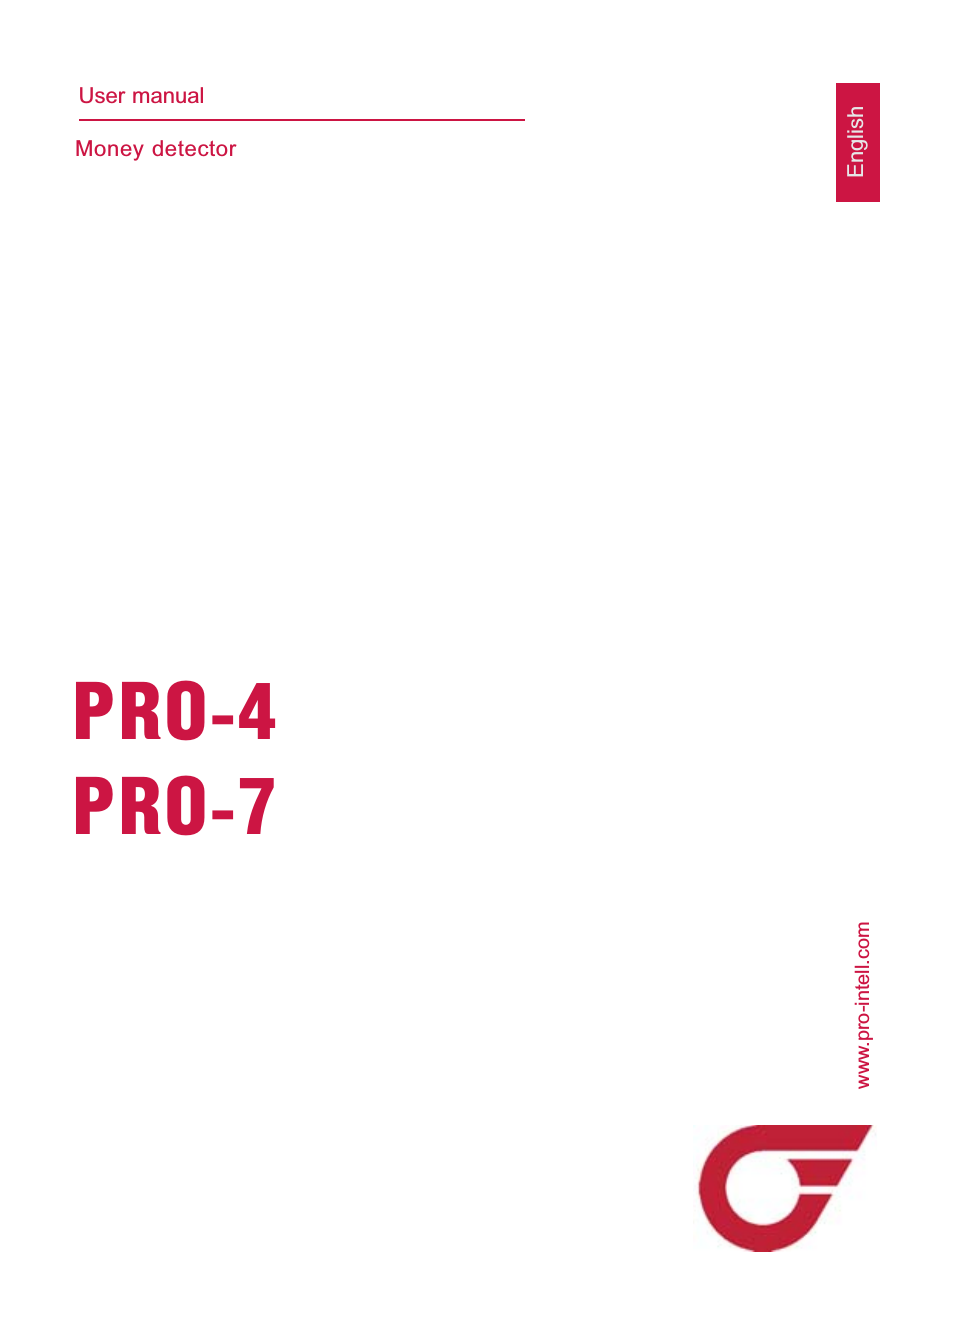 PRO-4